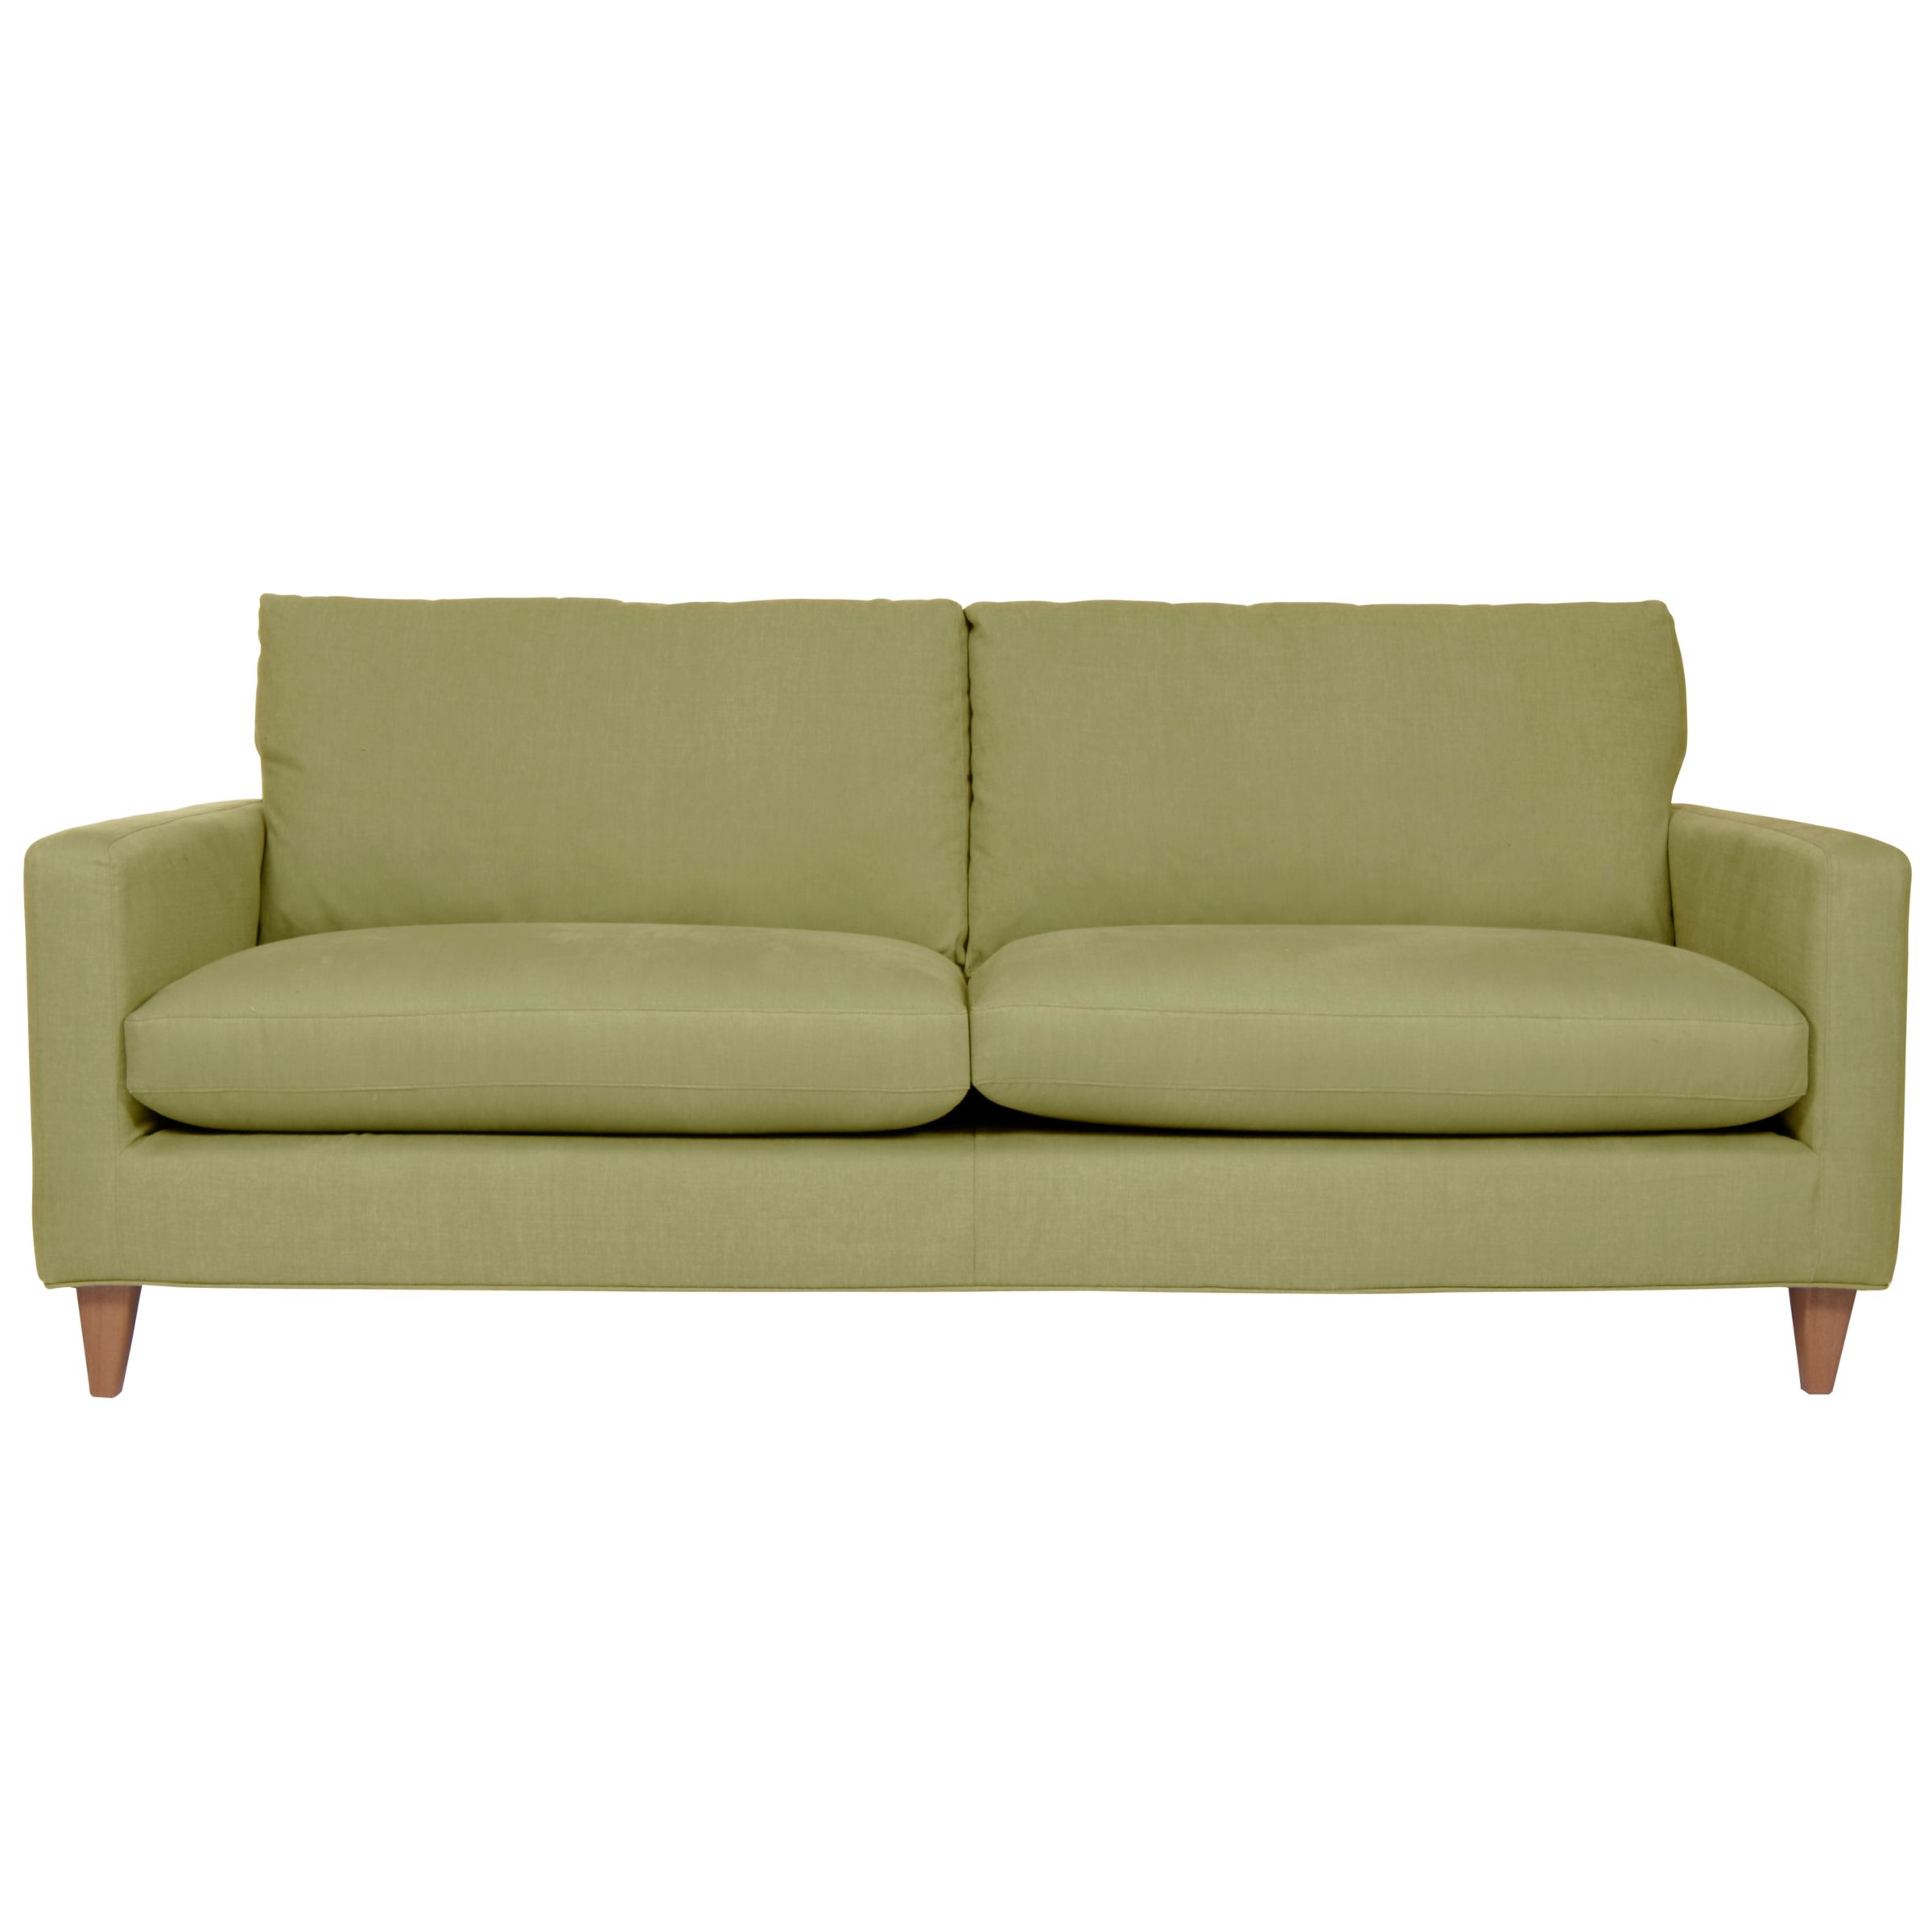 John Lewis Bailey Grand Sofa, Olive, width 214cm